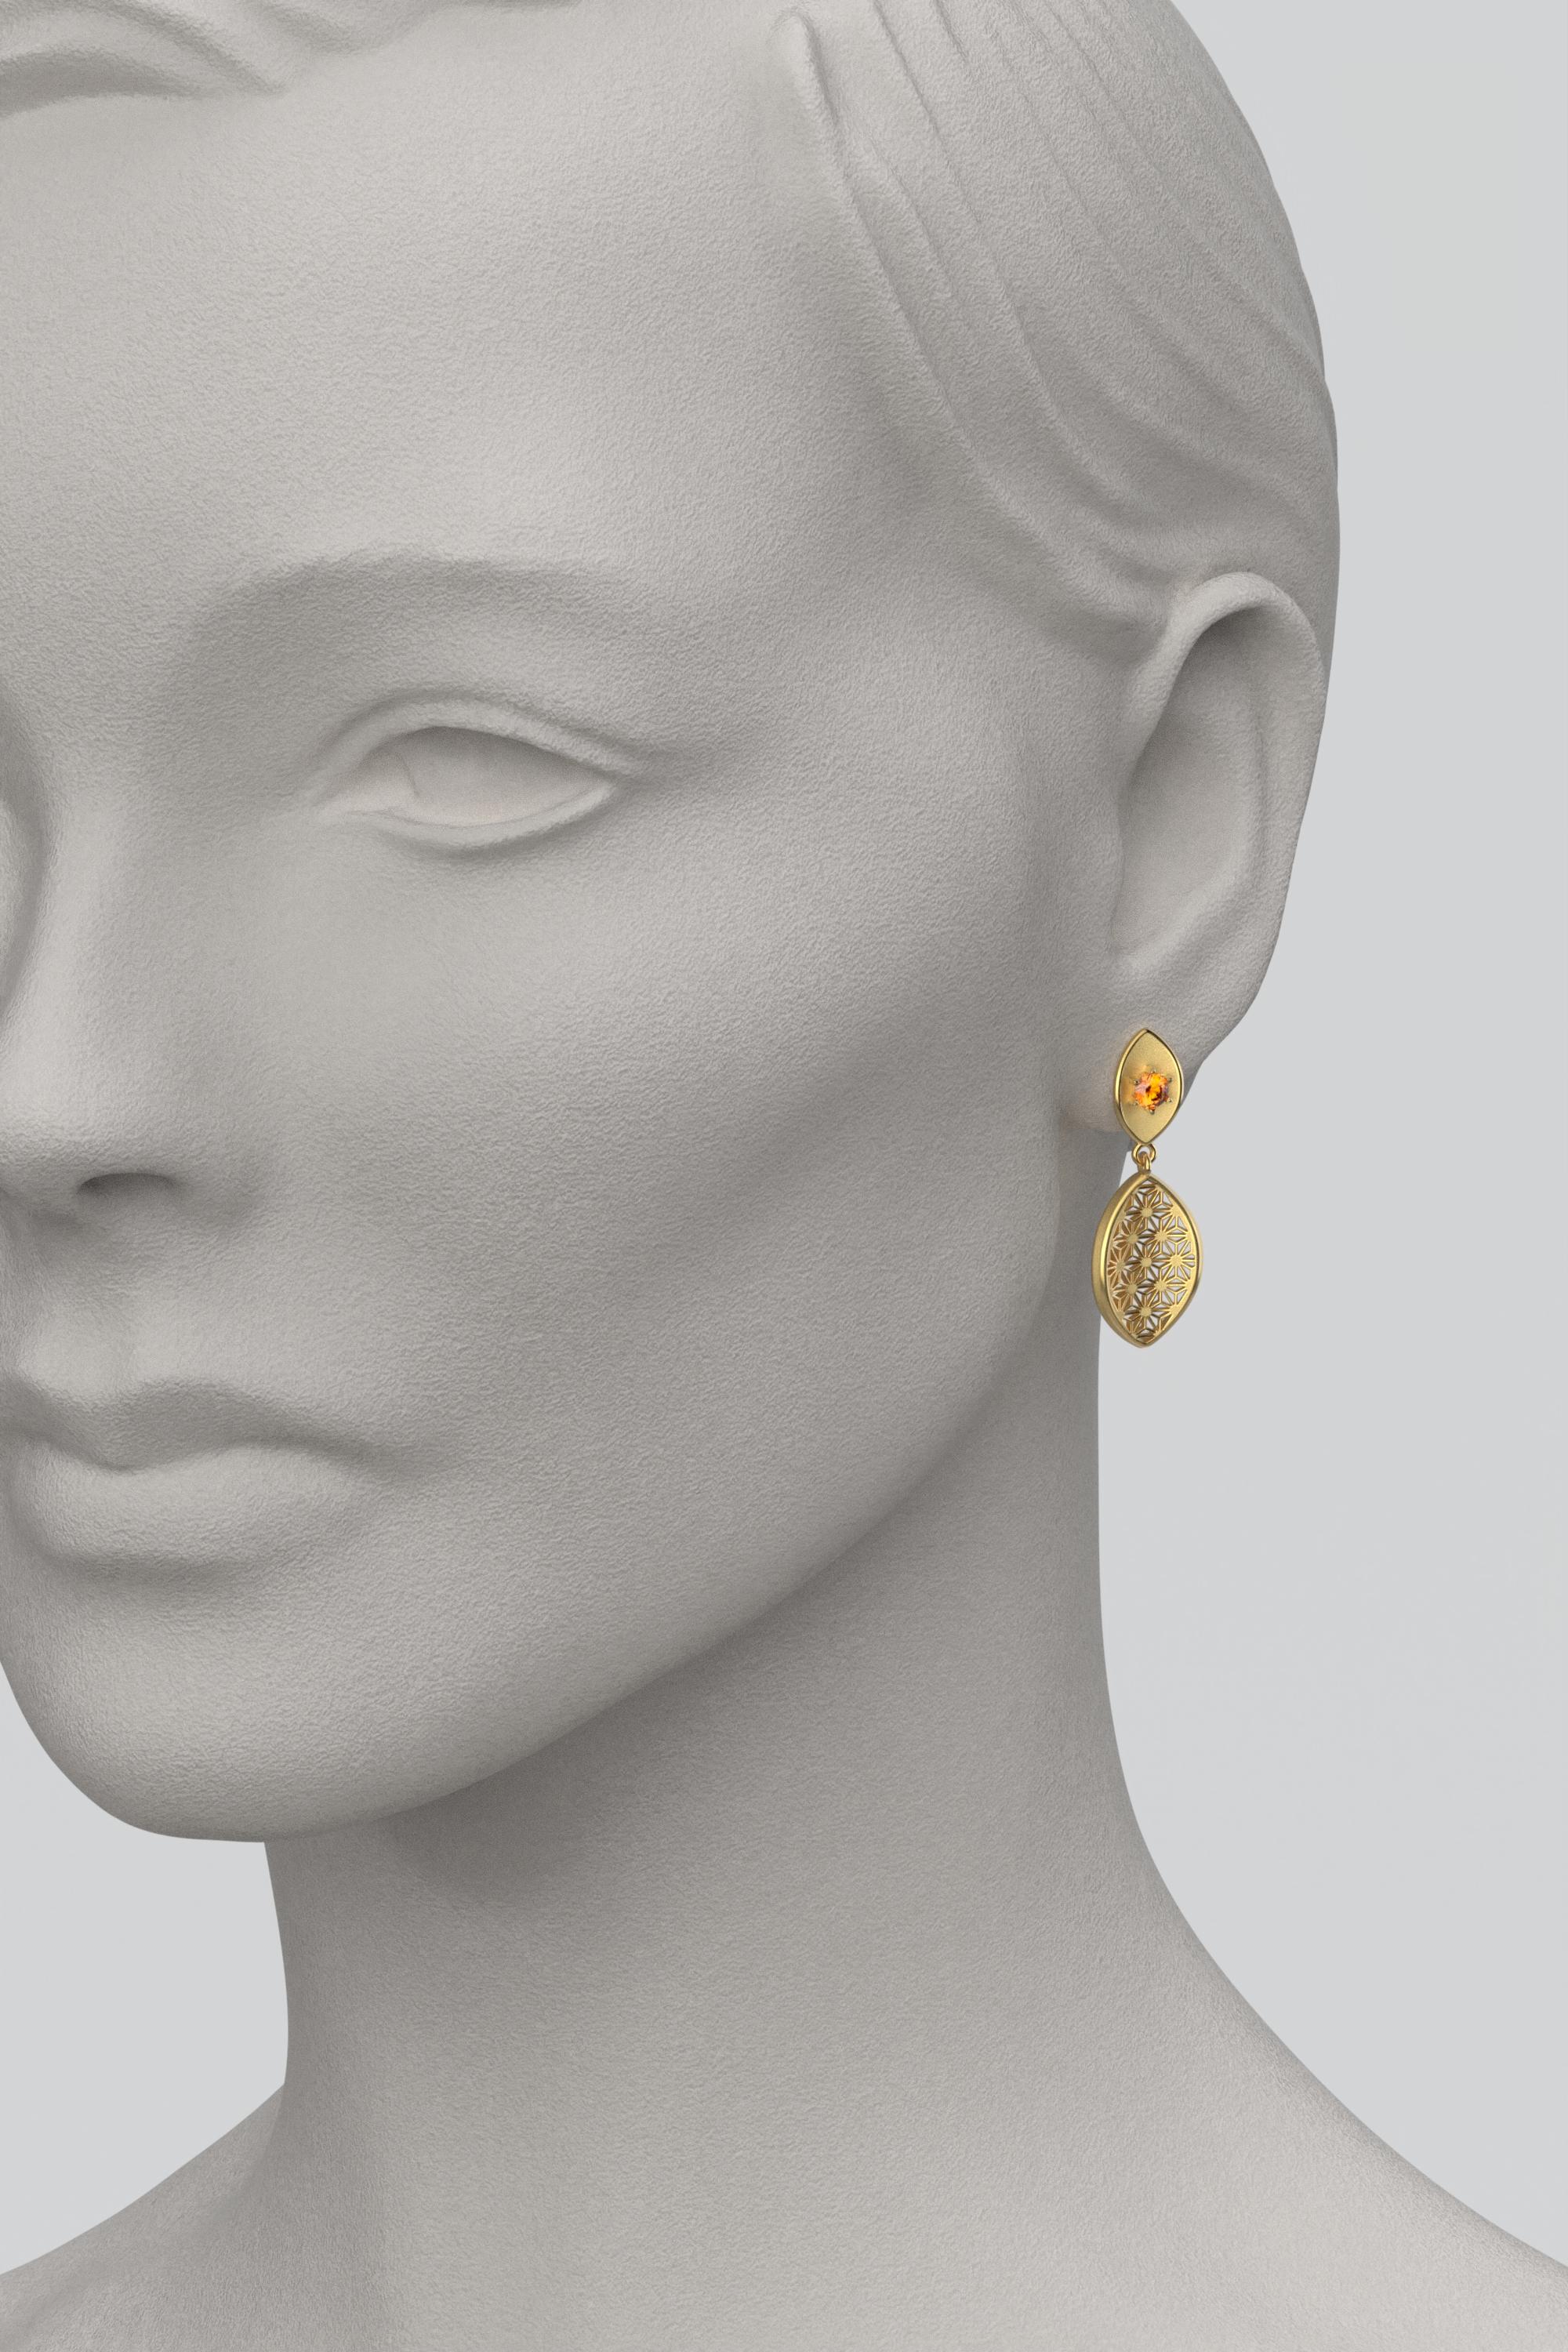 Women's  Oltremare Gioielli 14k Gold Hessonite Garnet Earrings made in Italy For Sale